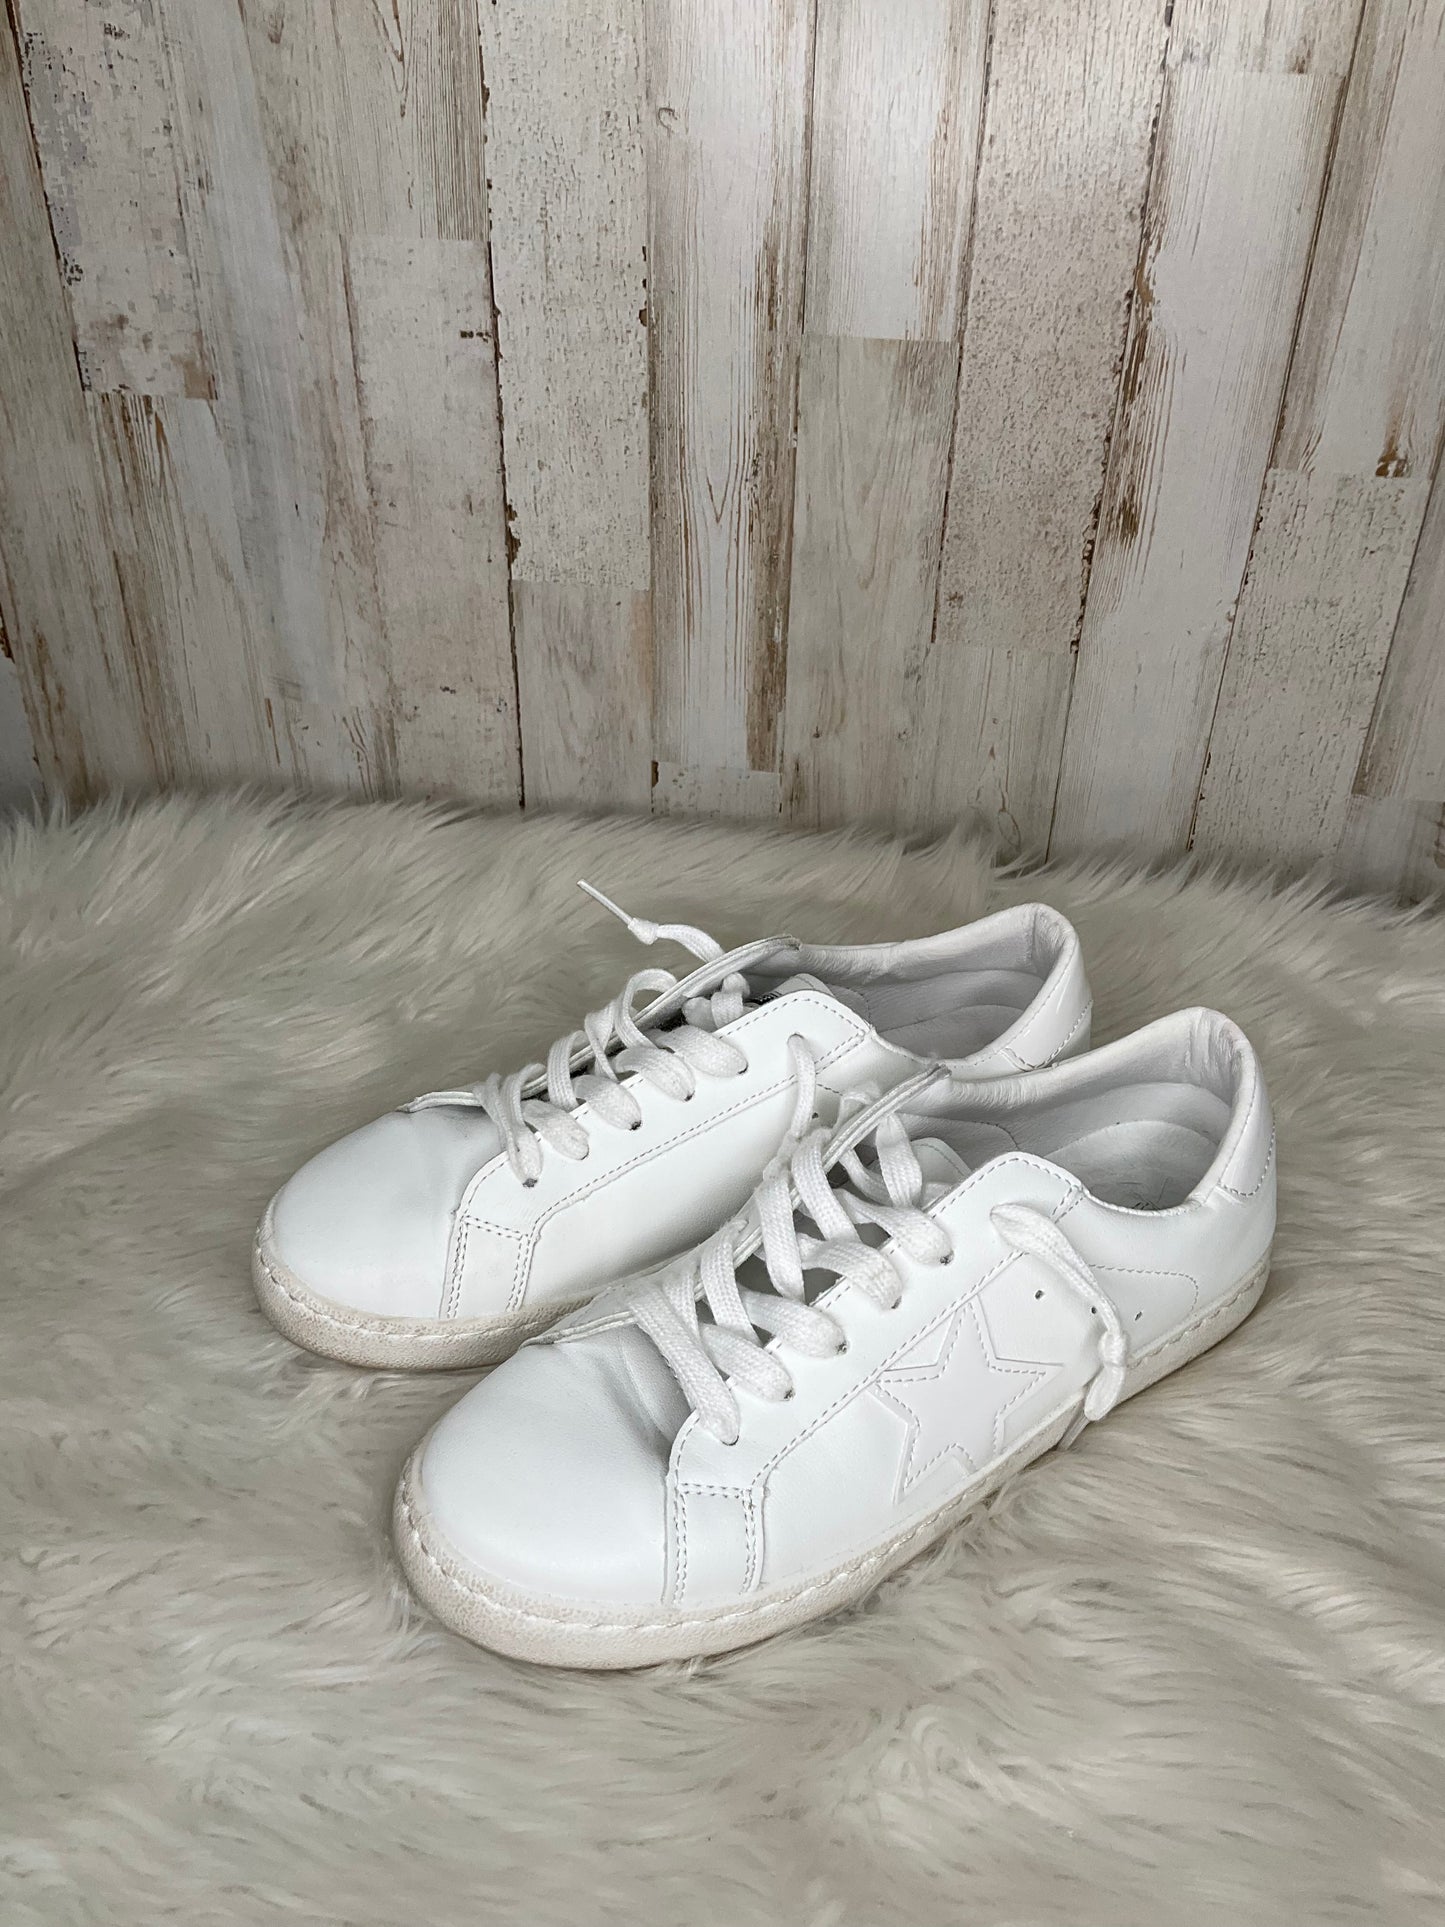 White Shoes Sneakers Vintage Havana, Size 8